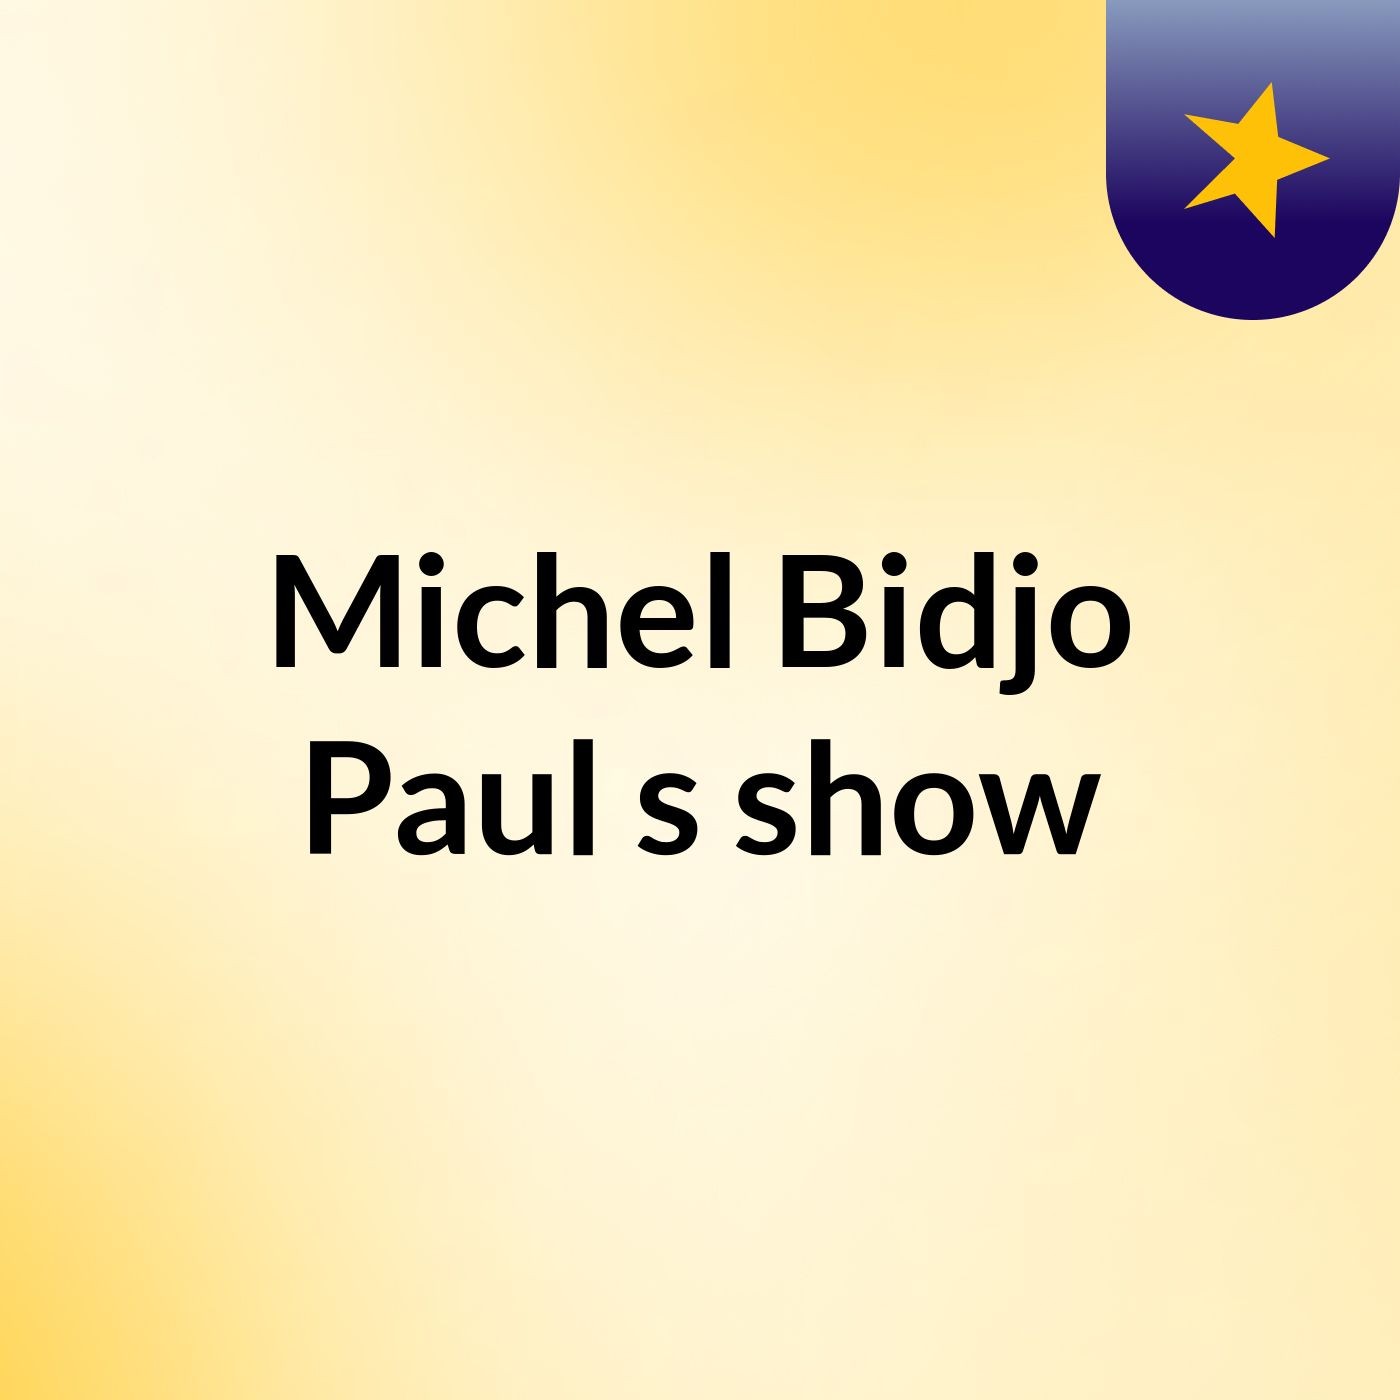 Michel Bidjo Paul's show